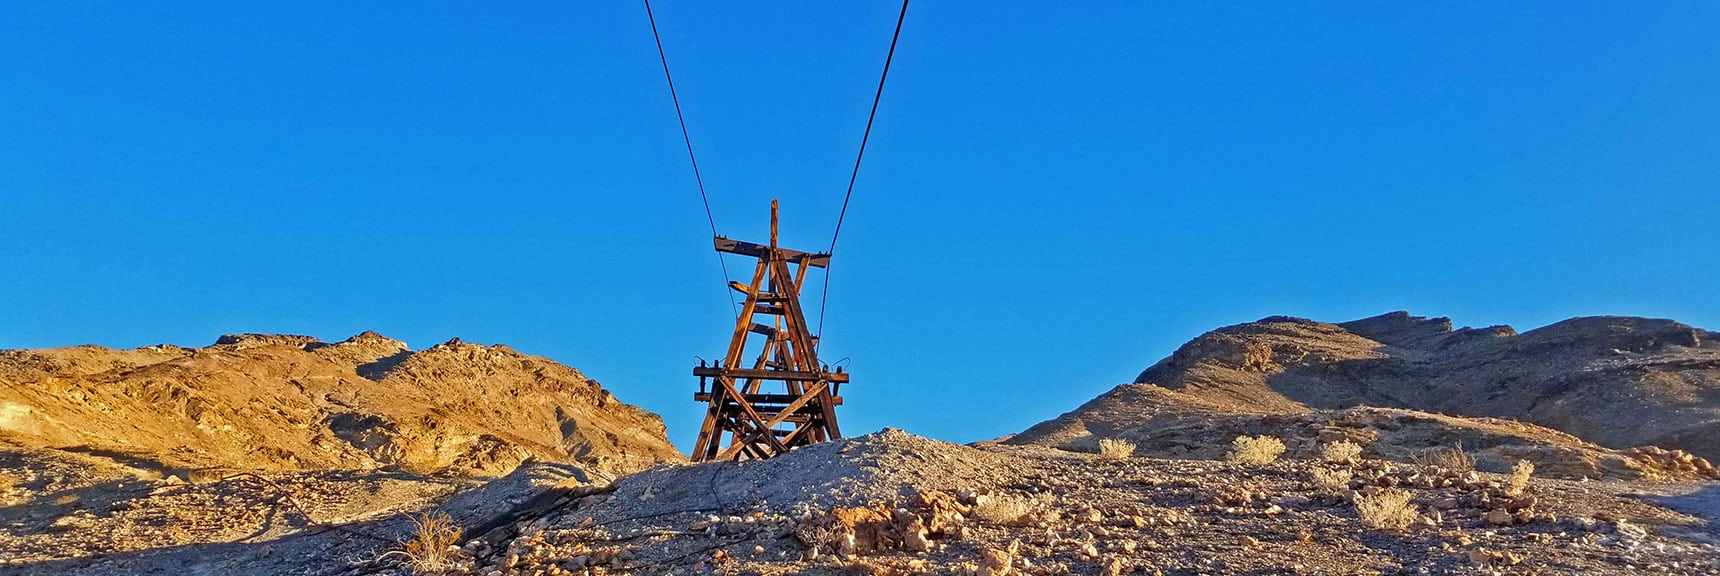 Aerial Tram Towers Continuing Upward | Keane Wonder Mine | Death Valley National Park, California